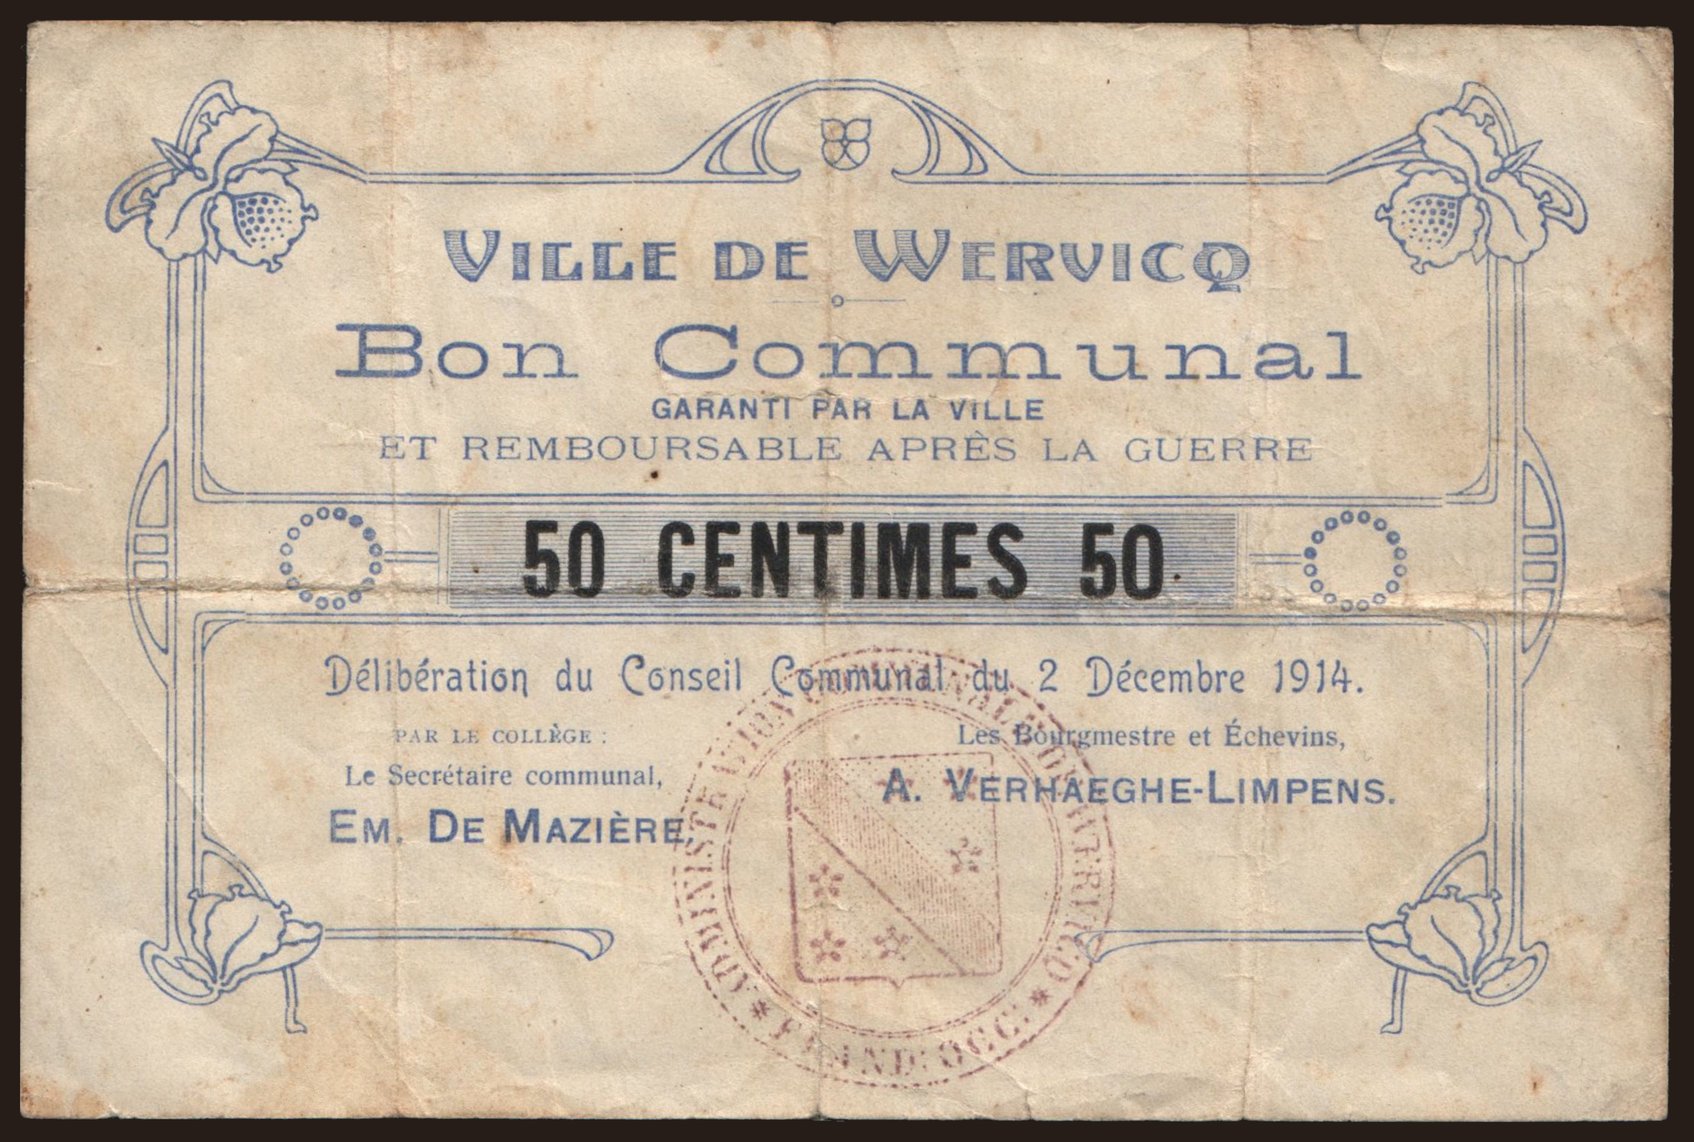 Wervicq, 50 centimes, 1914